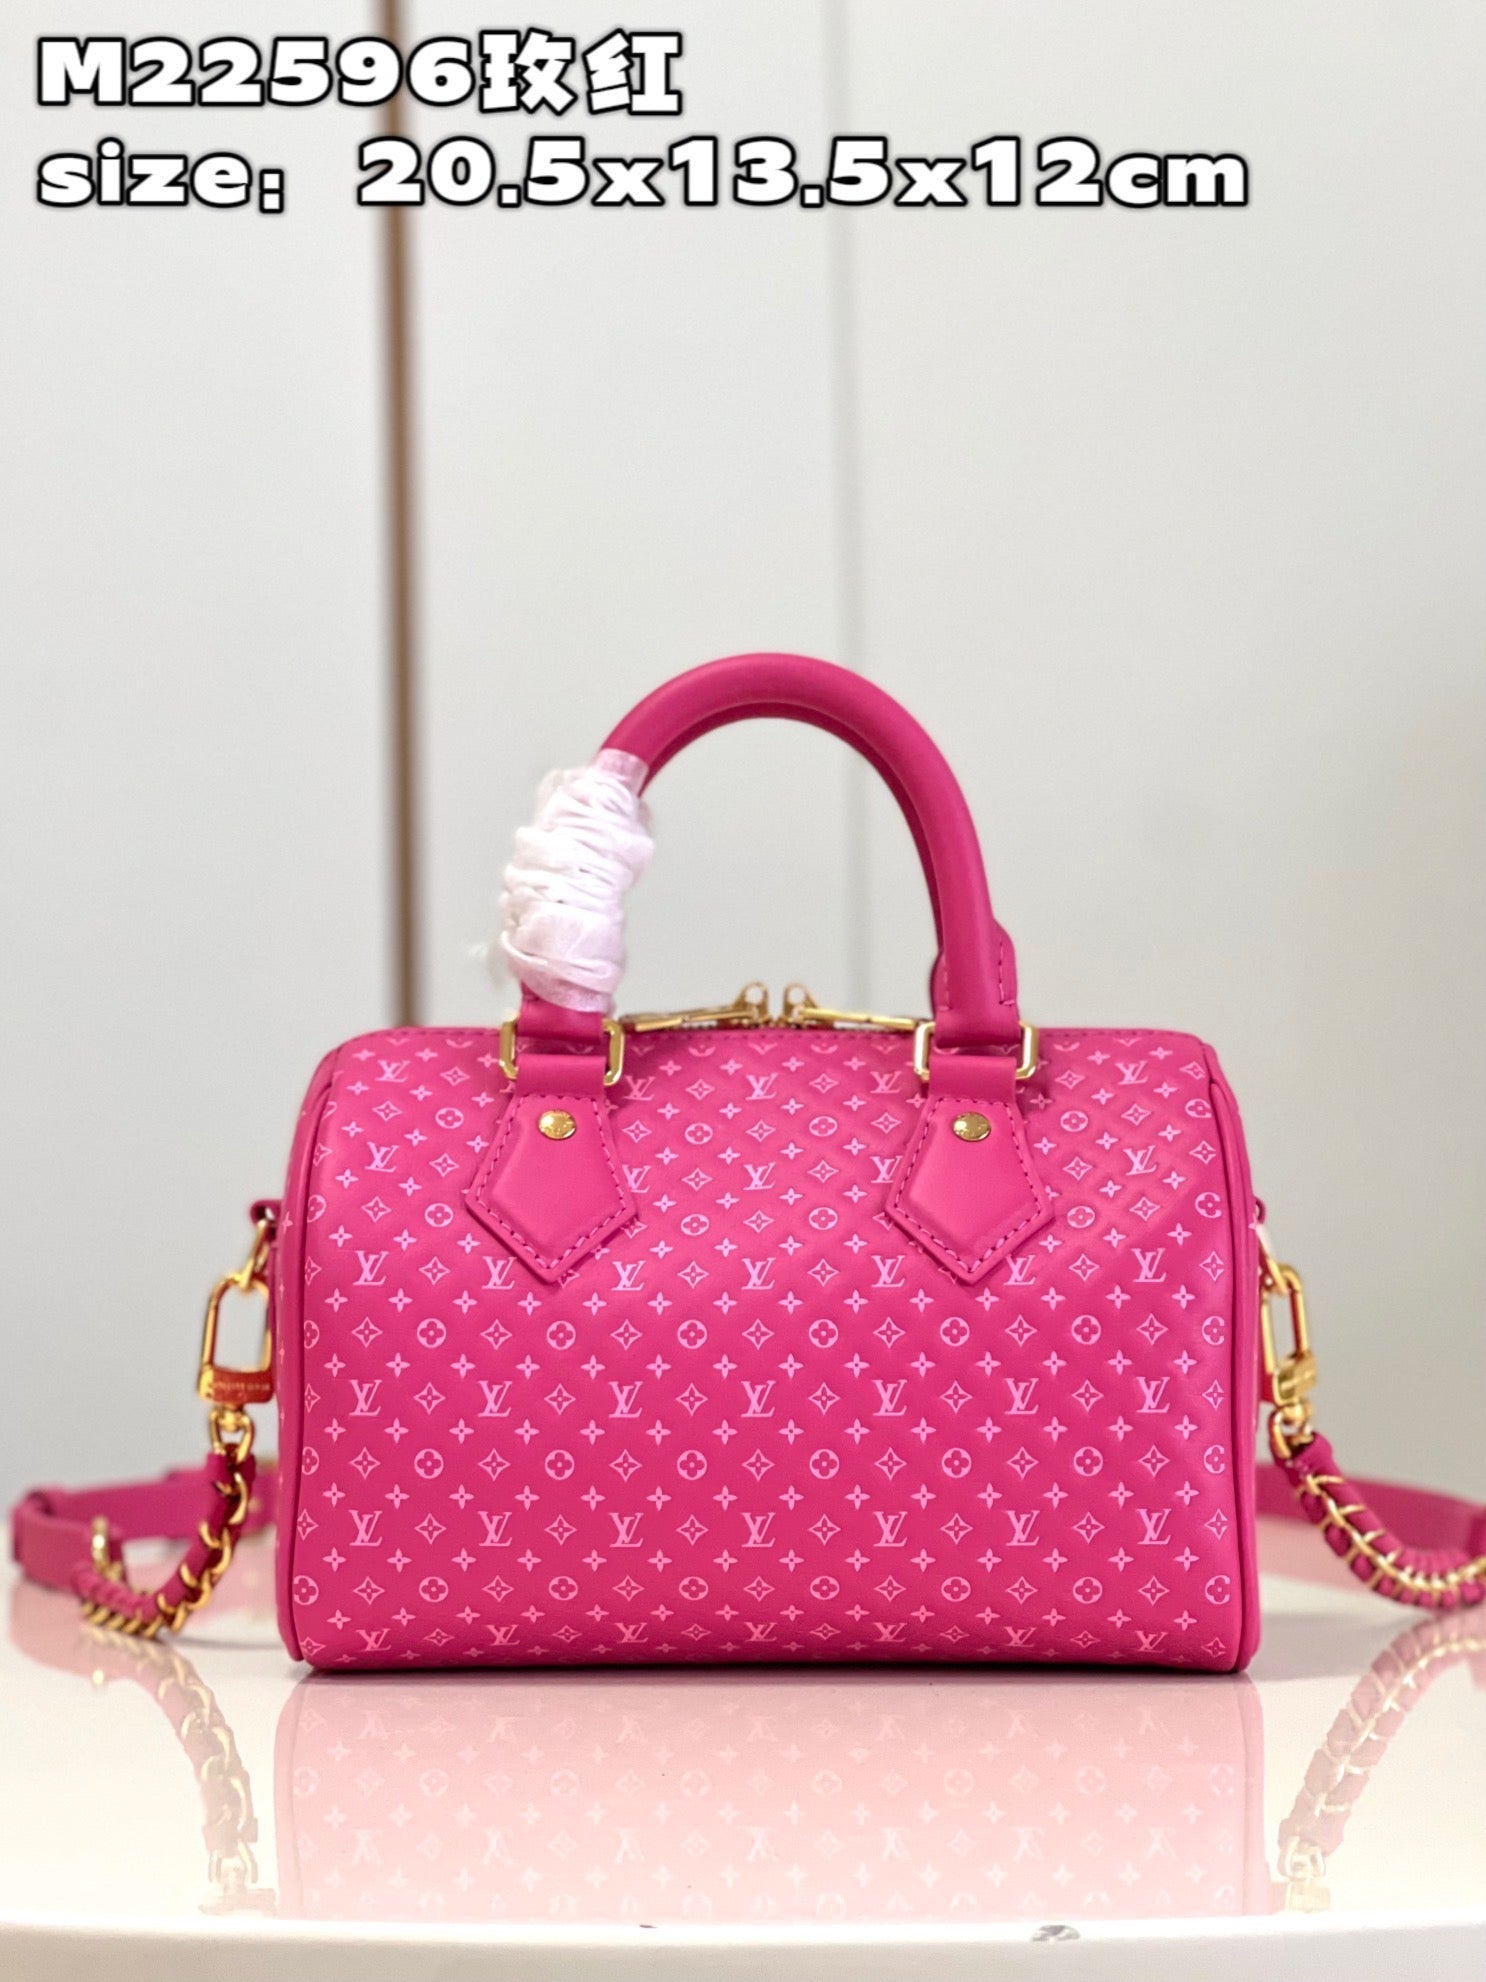 Speedy Bandoulière 20 Fashion Leather - Handbags